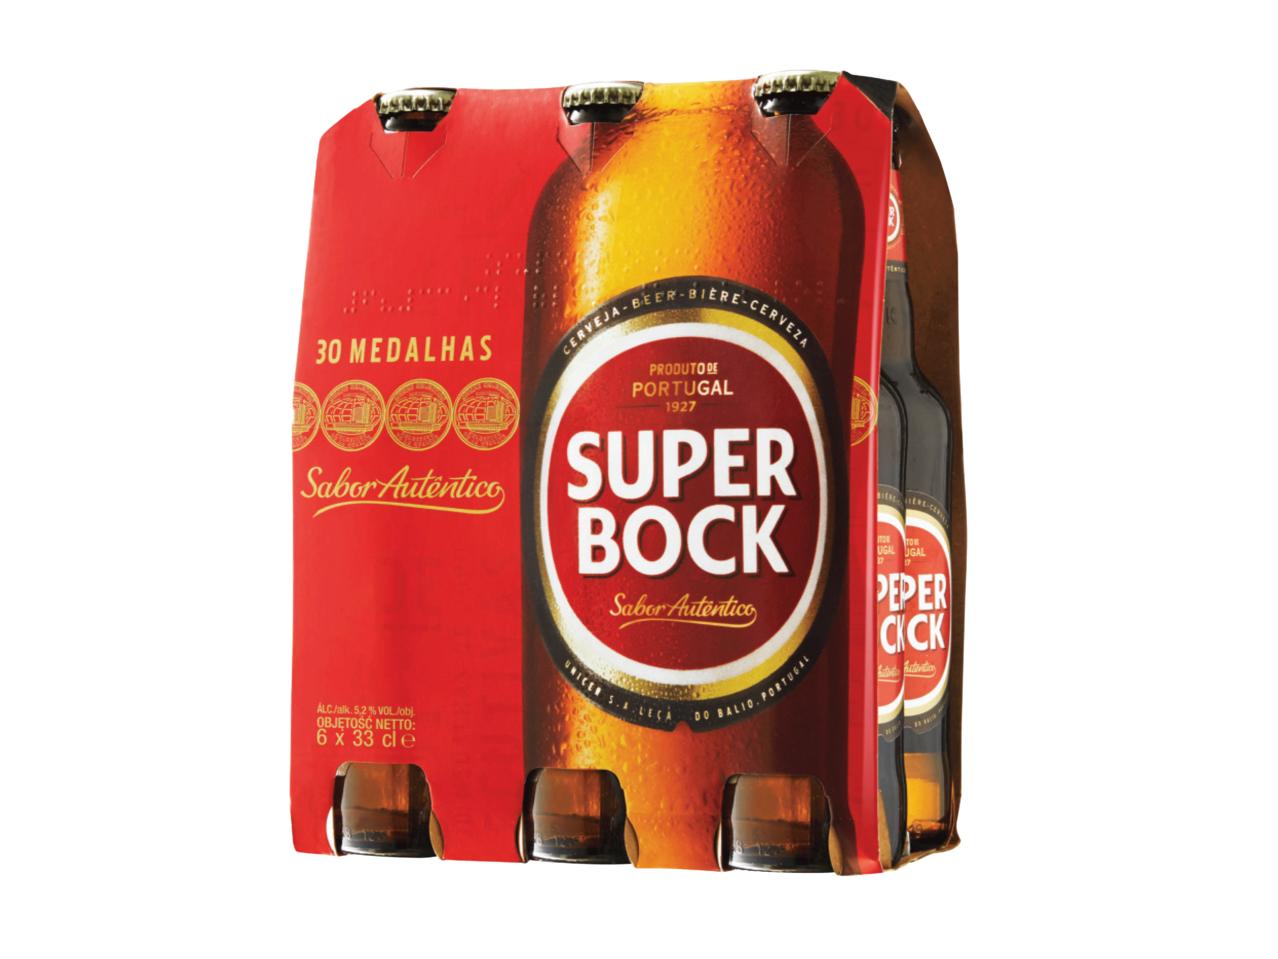 SUPER BOCK Portuguese Beer1